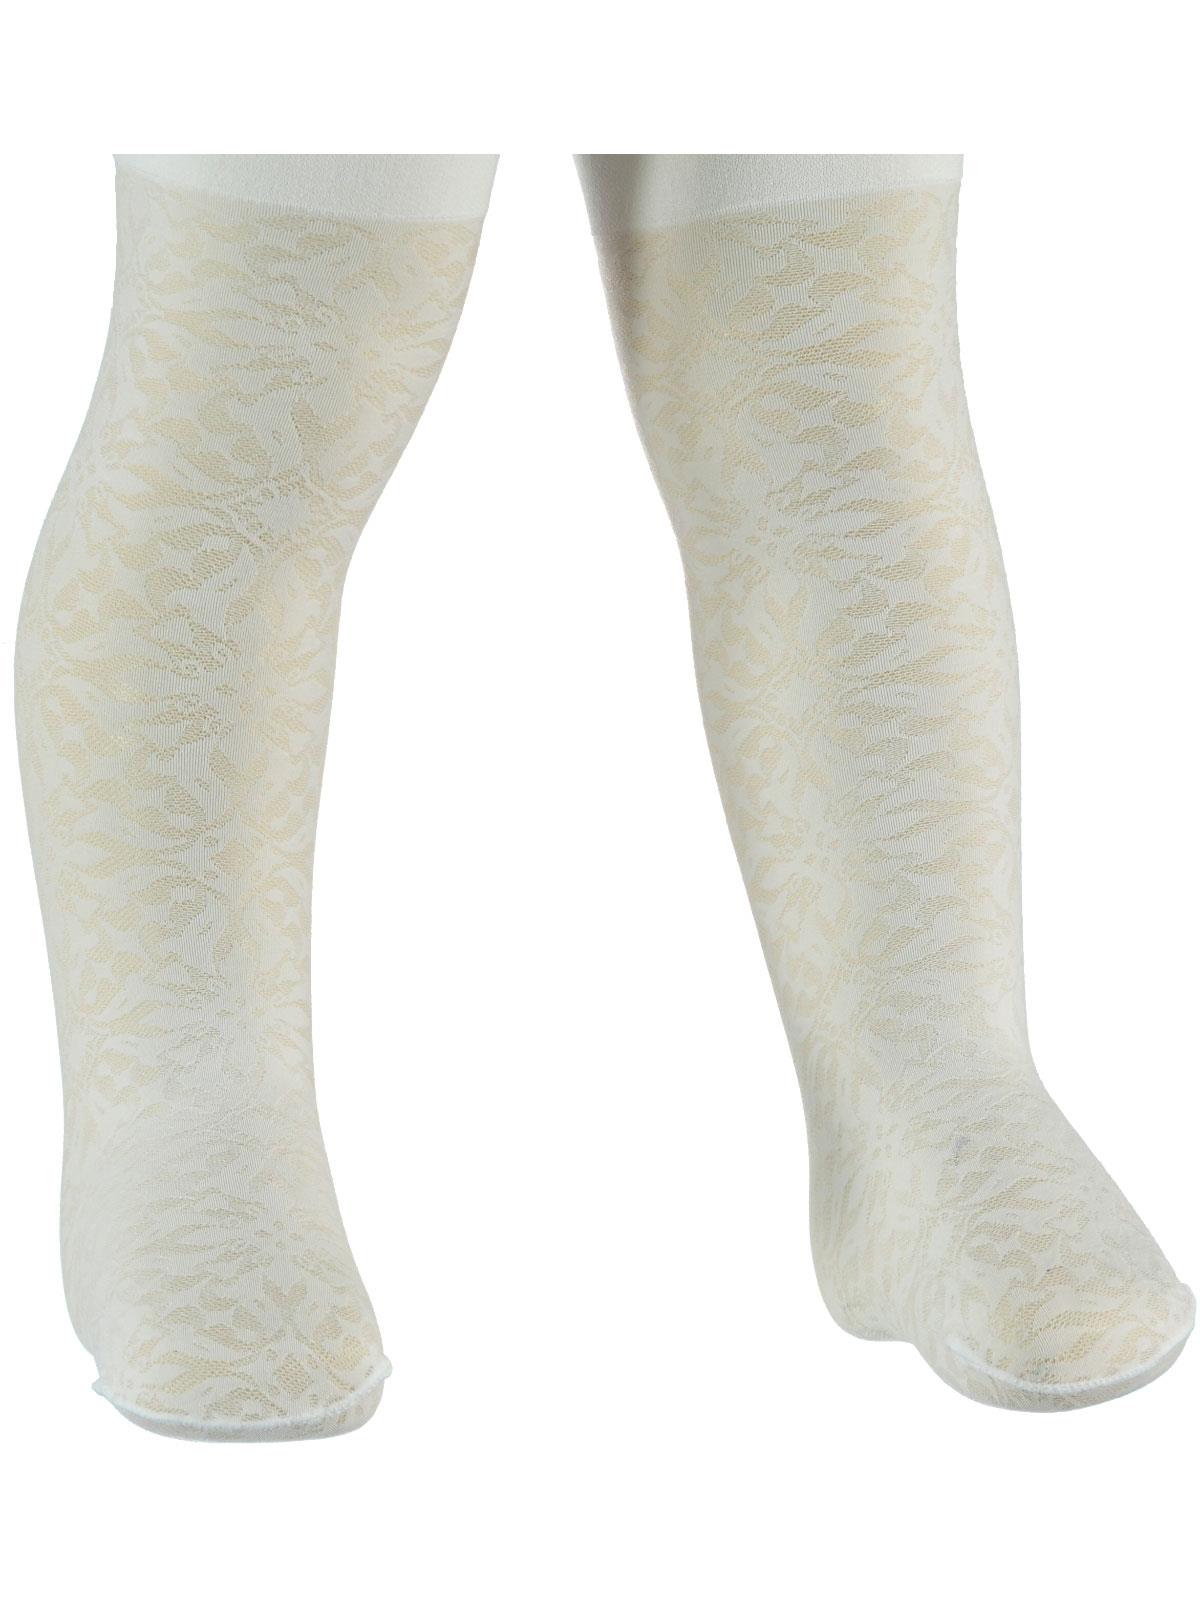 Bella Calze Kız Bebek Külotlu Çorap 6-24 Ay Beyaz